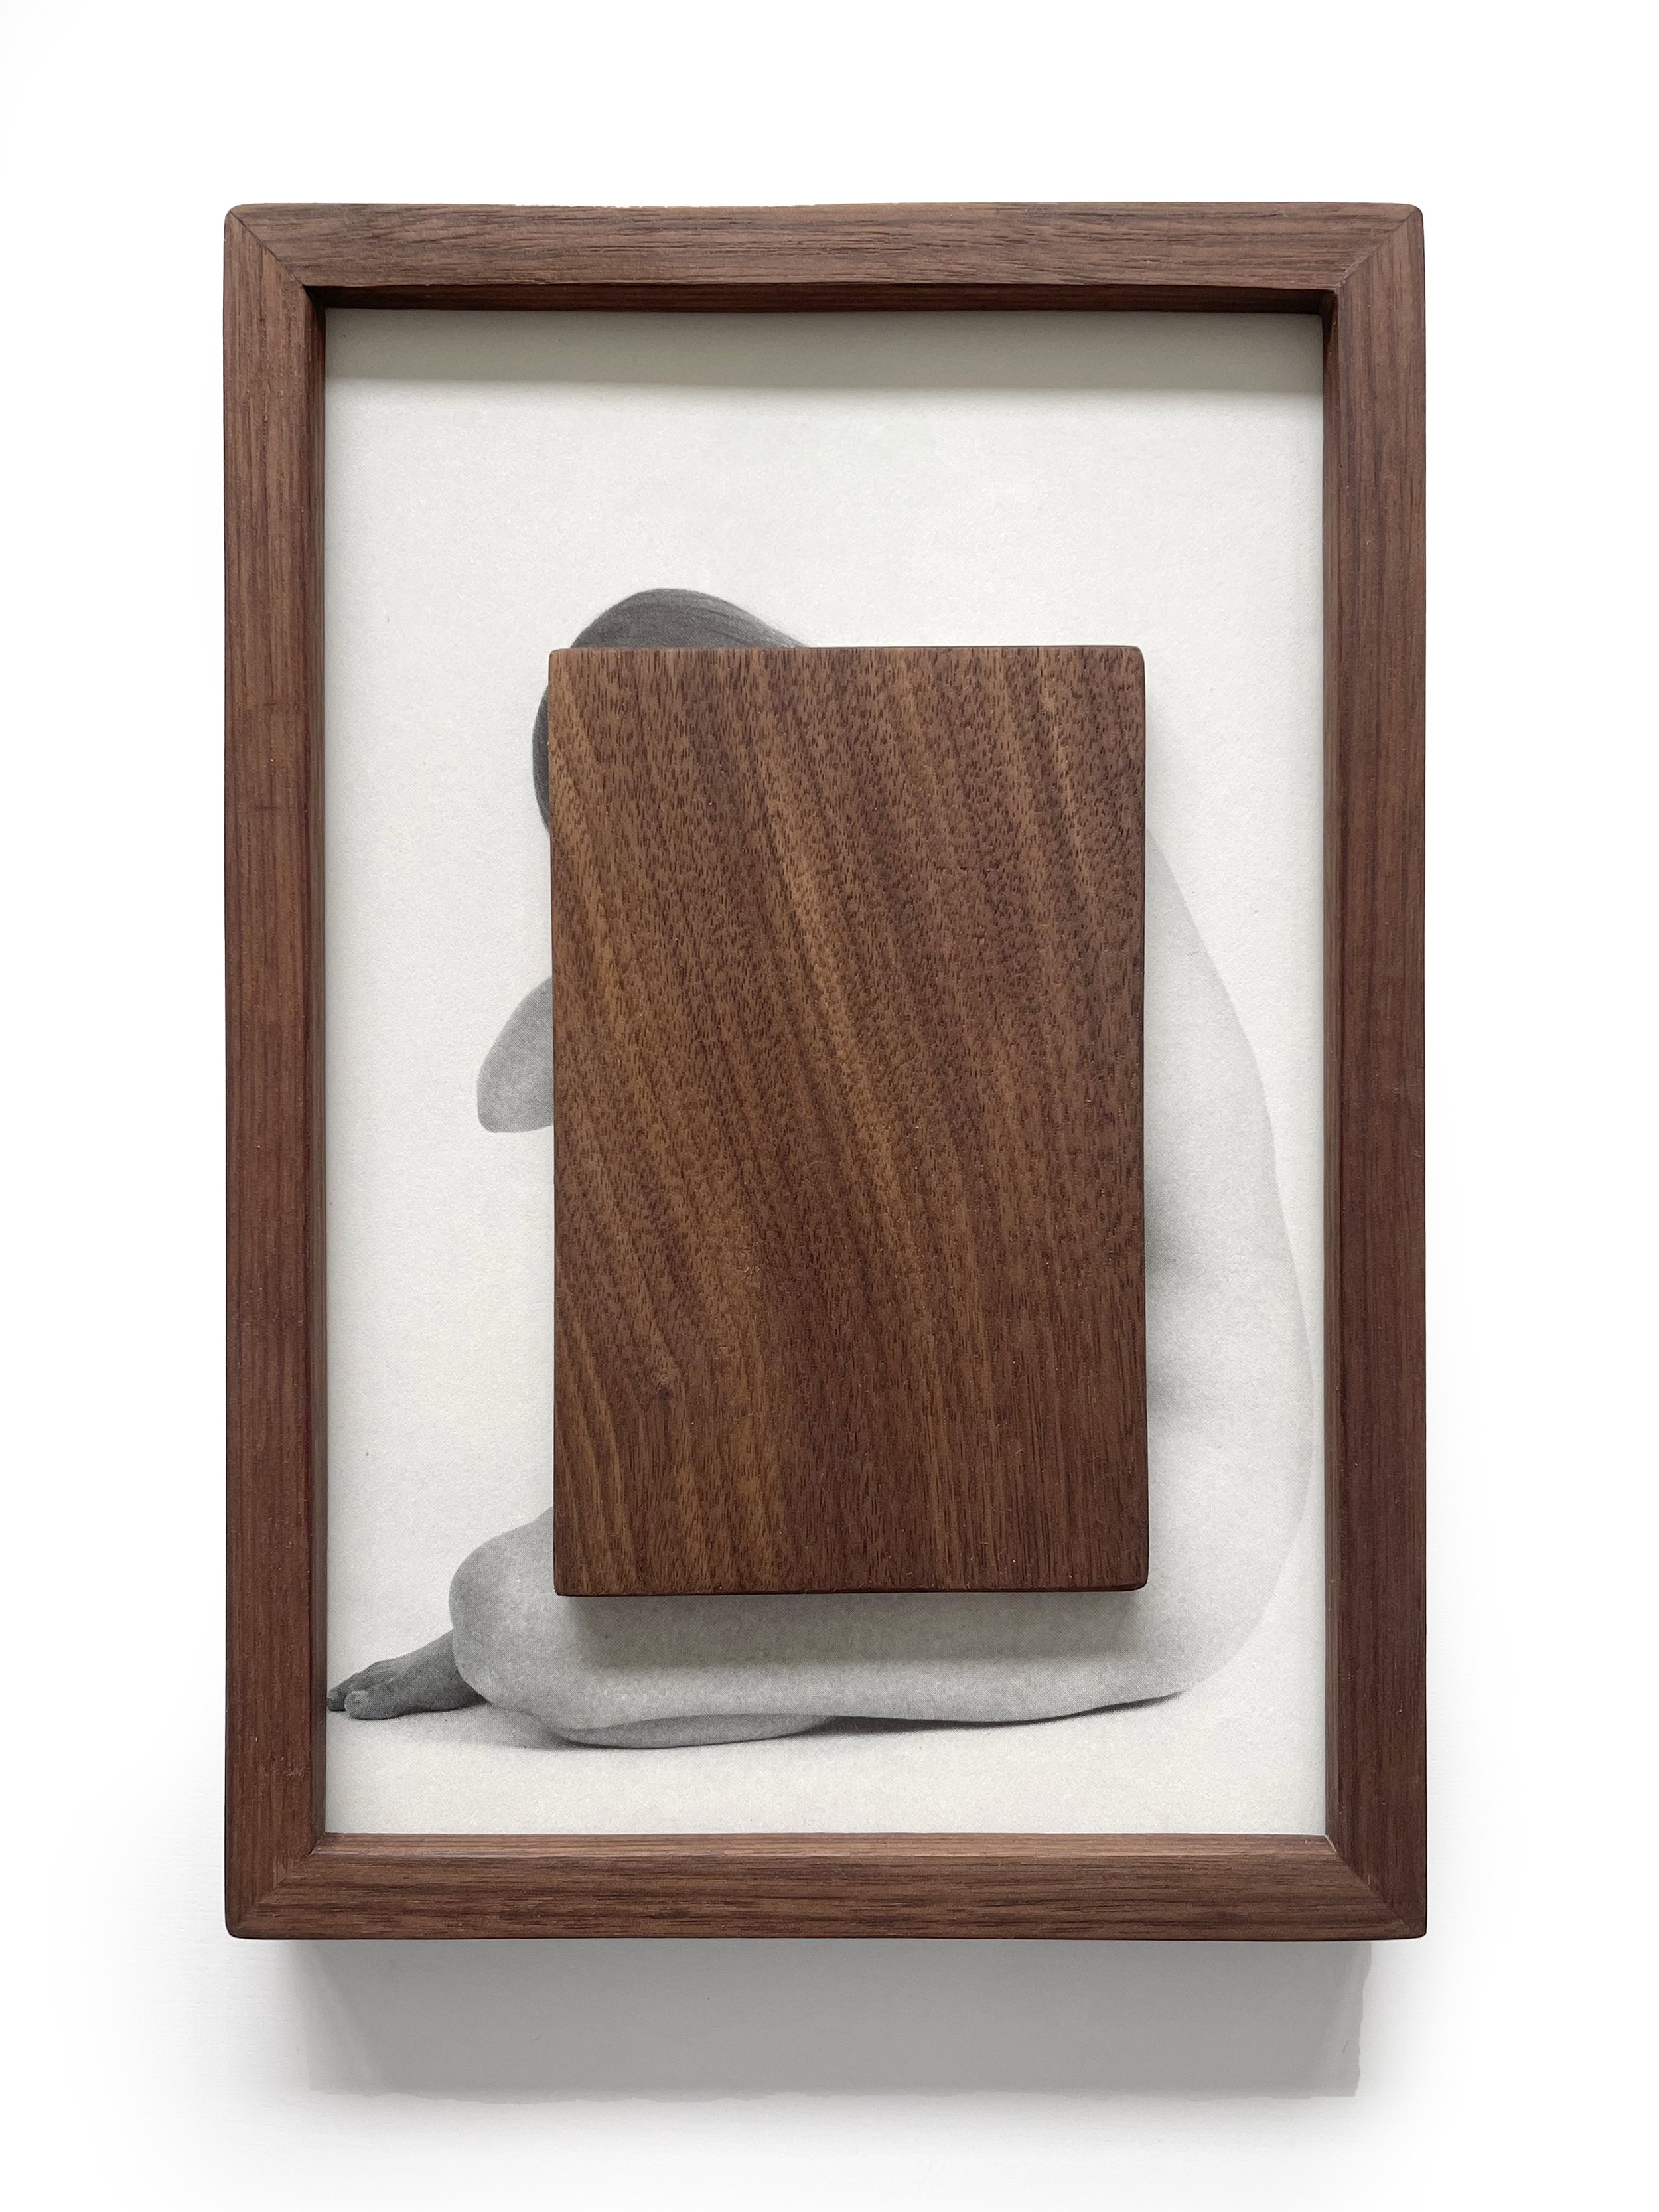 ELI CRAVEN |&nbsp;Human Figure #9, 9.5 x 6.75 inches / 24 x 17 cm, found book page, walnut panel, artist’s frame, 2023